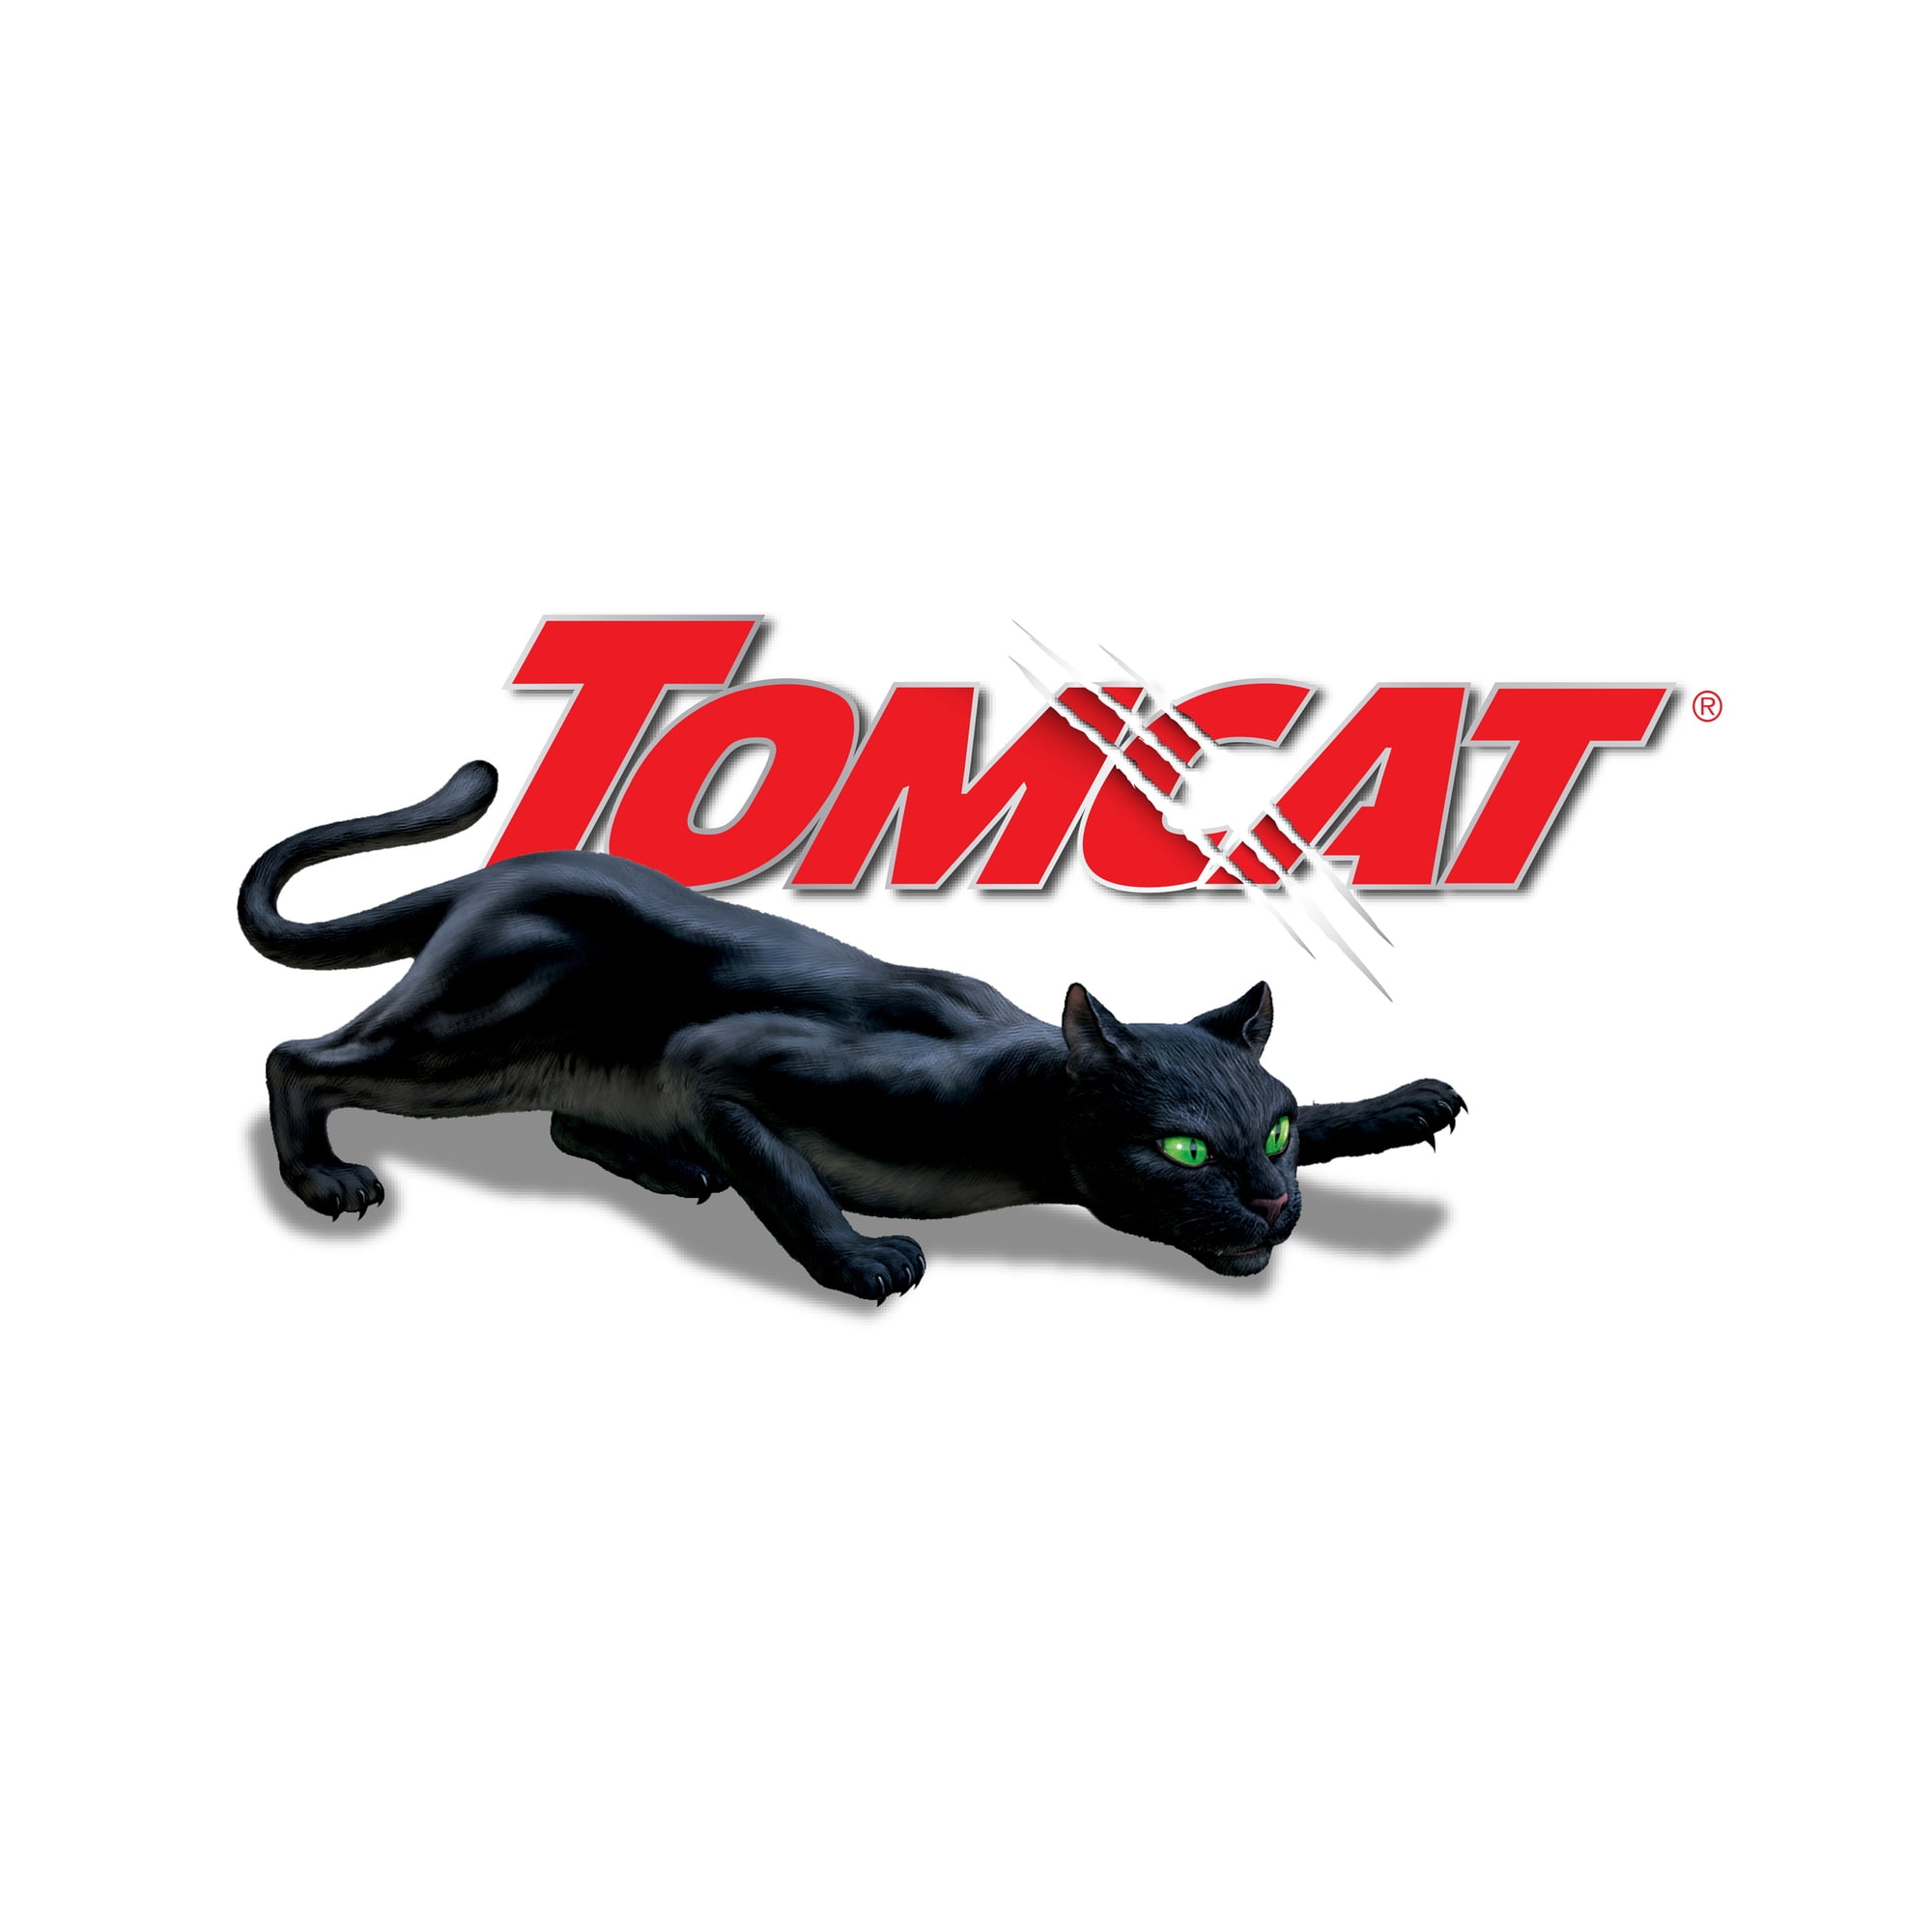 Tomcat Mouse Killer Child Resistant, Disposable Station